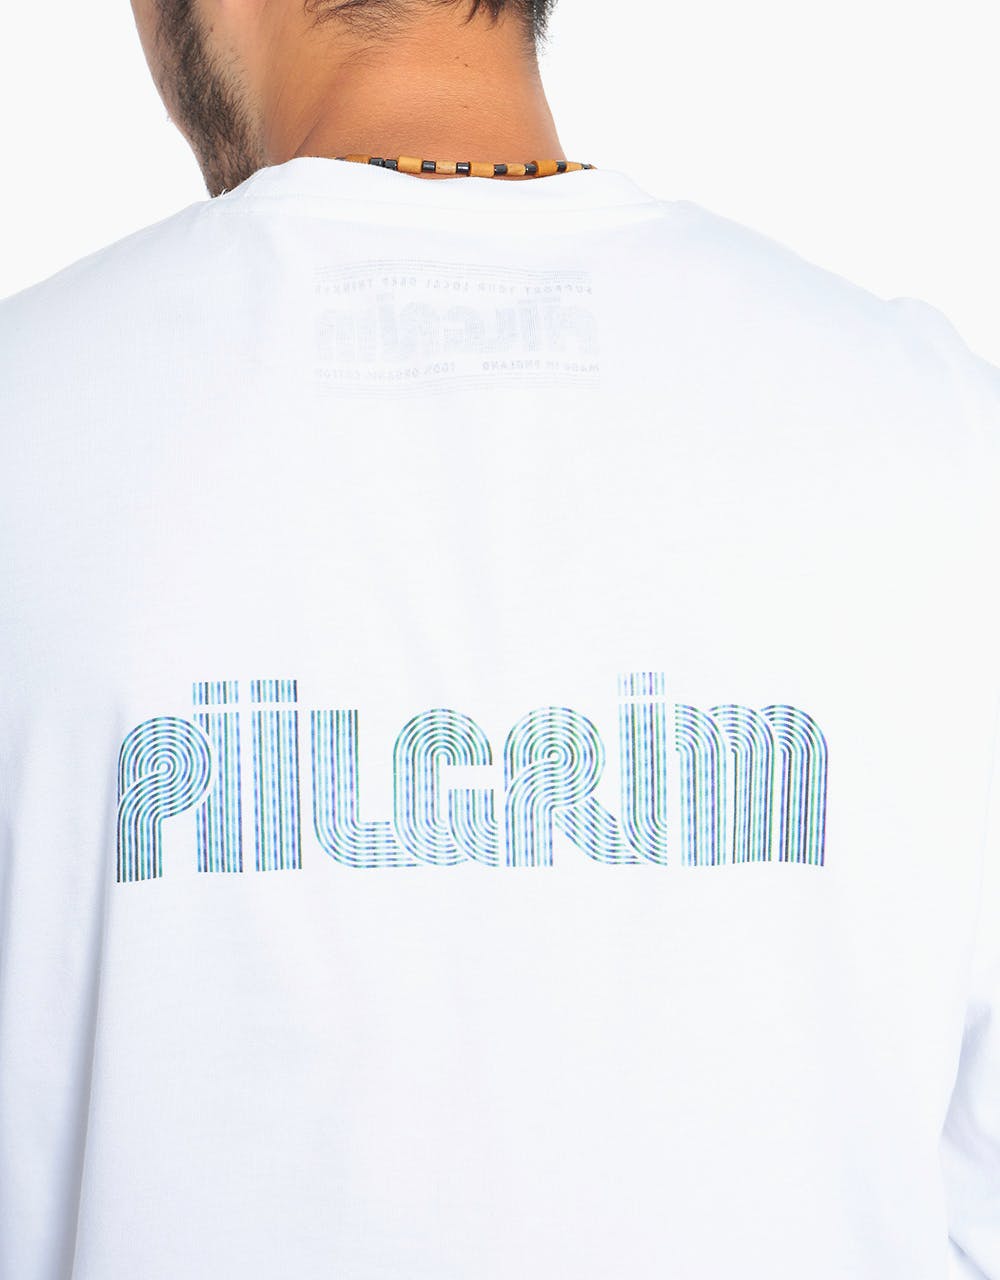 Piilgrim Memory L/S T-Shirt - White